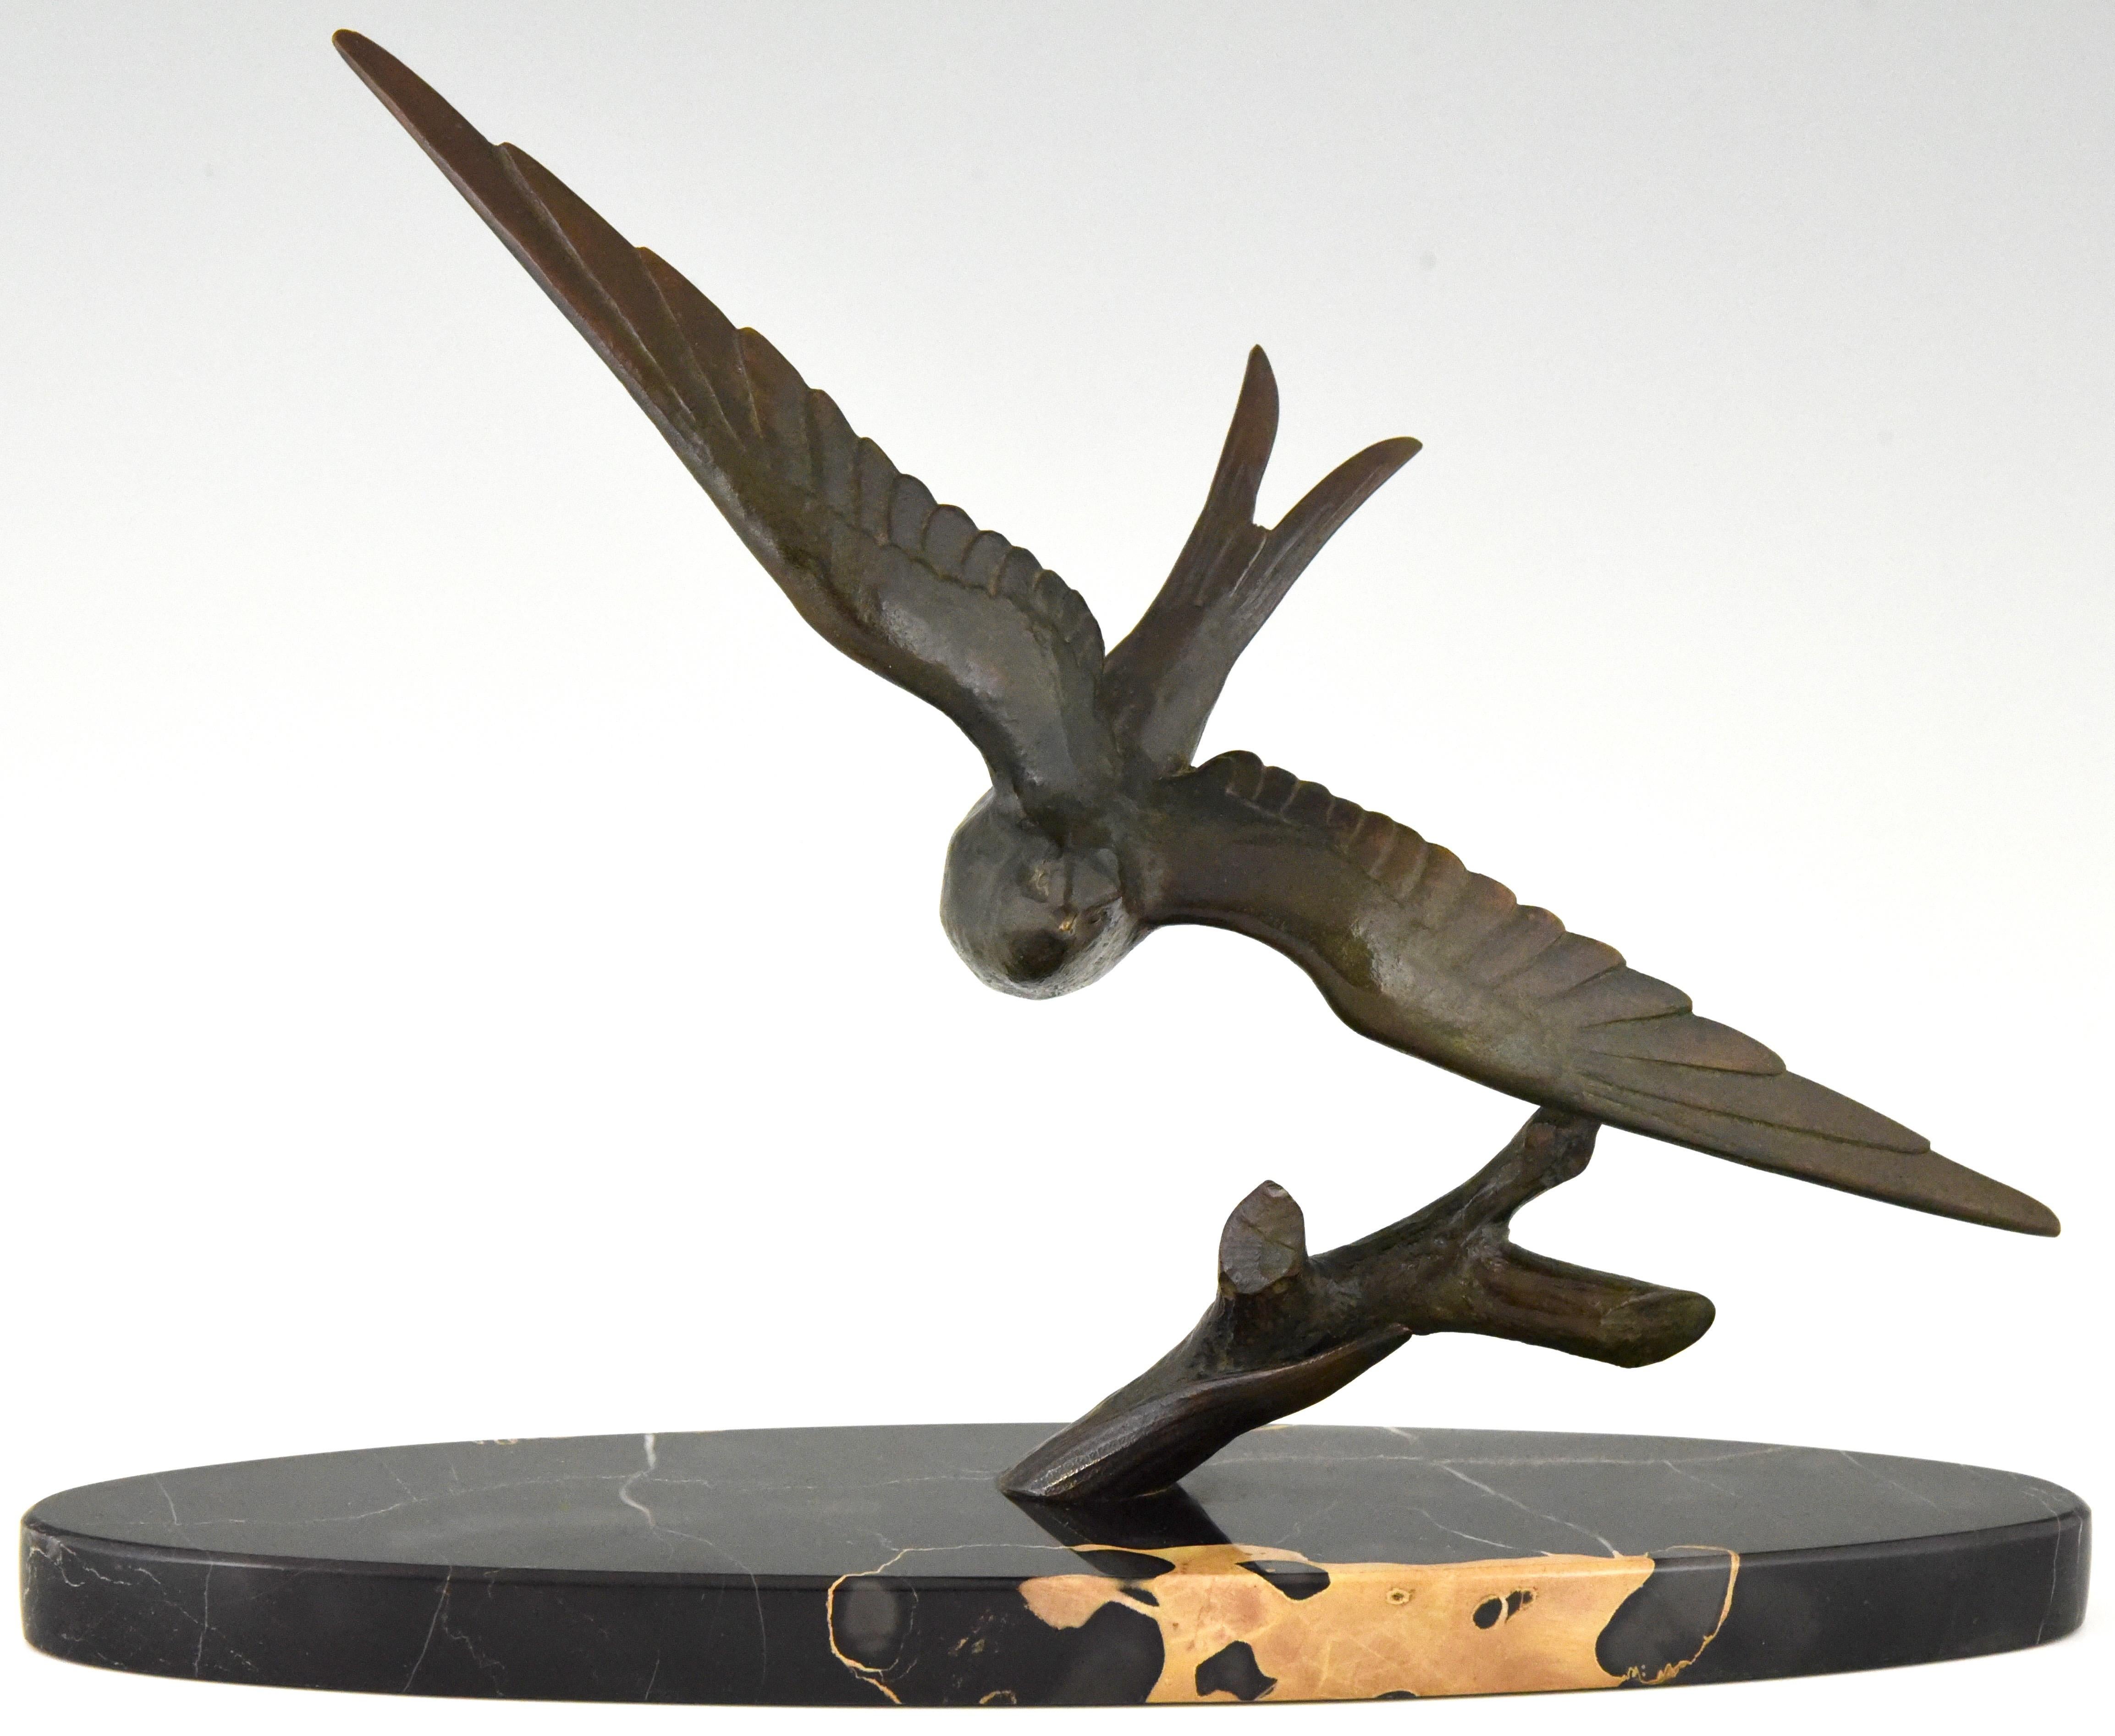 20th Century Art Deco Bronze Sculpture of a Swallow Bird by Ruchot, France, 1930